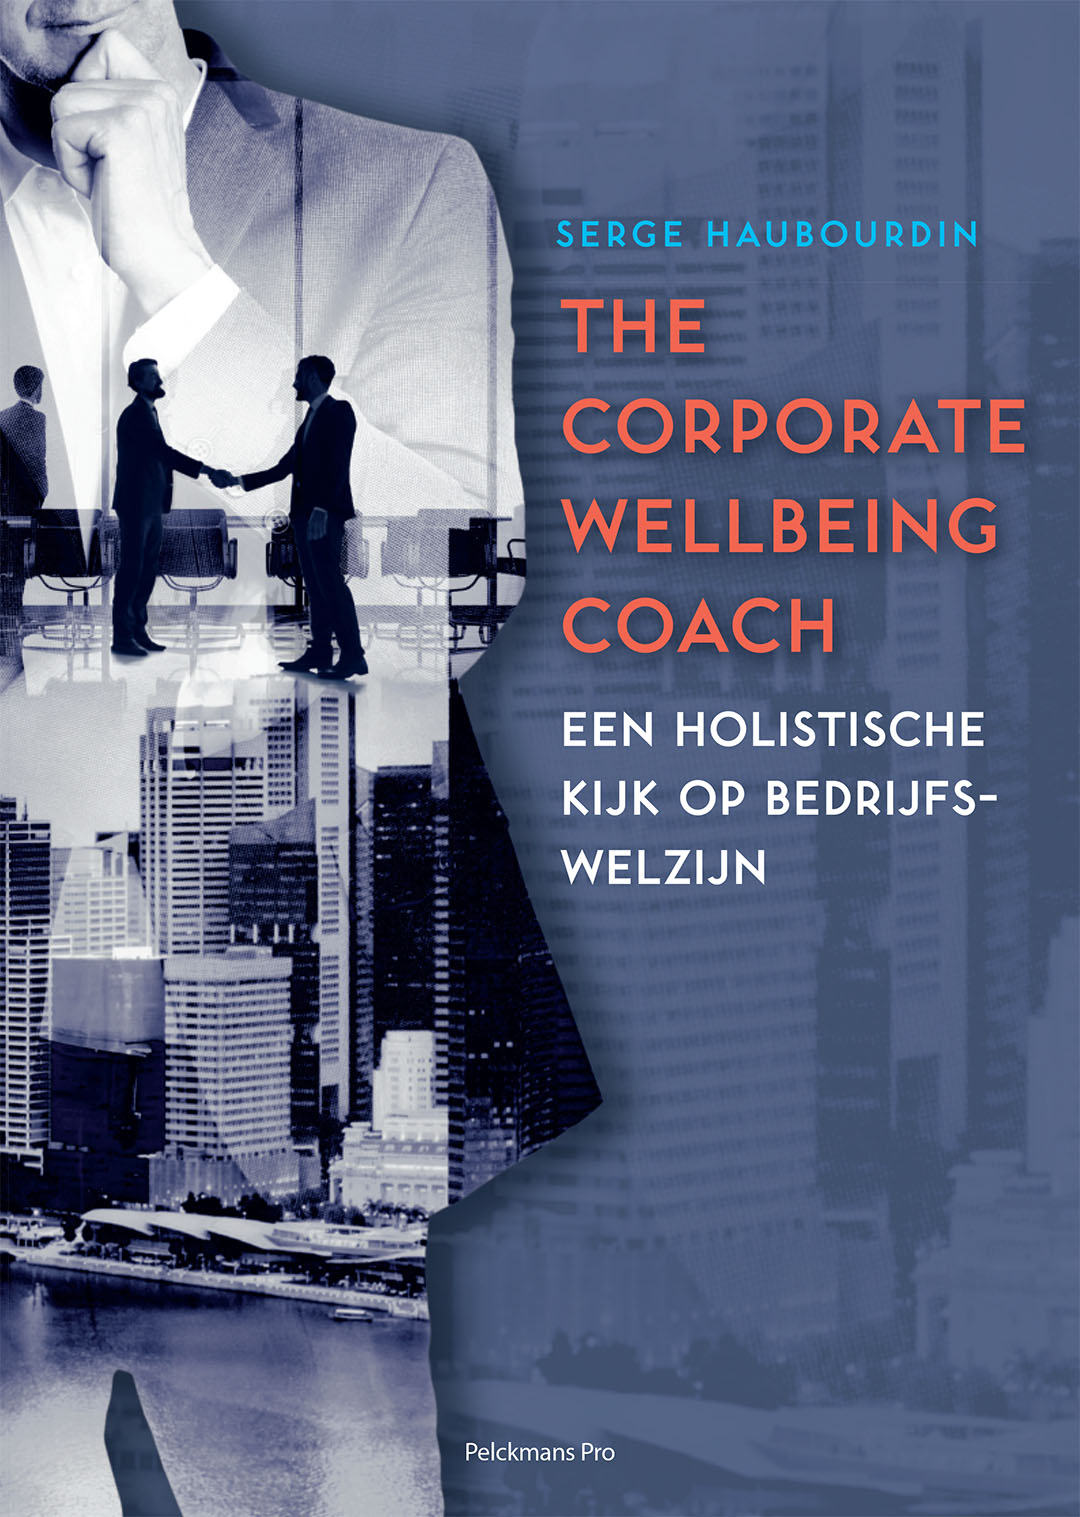 525575_047 Haubourdin_The Corporate Wellbeing Coach.indd